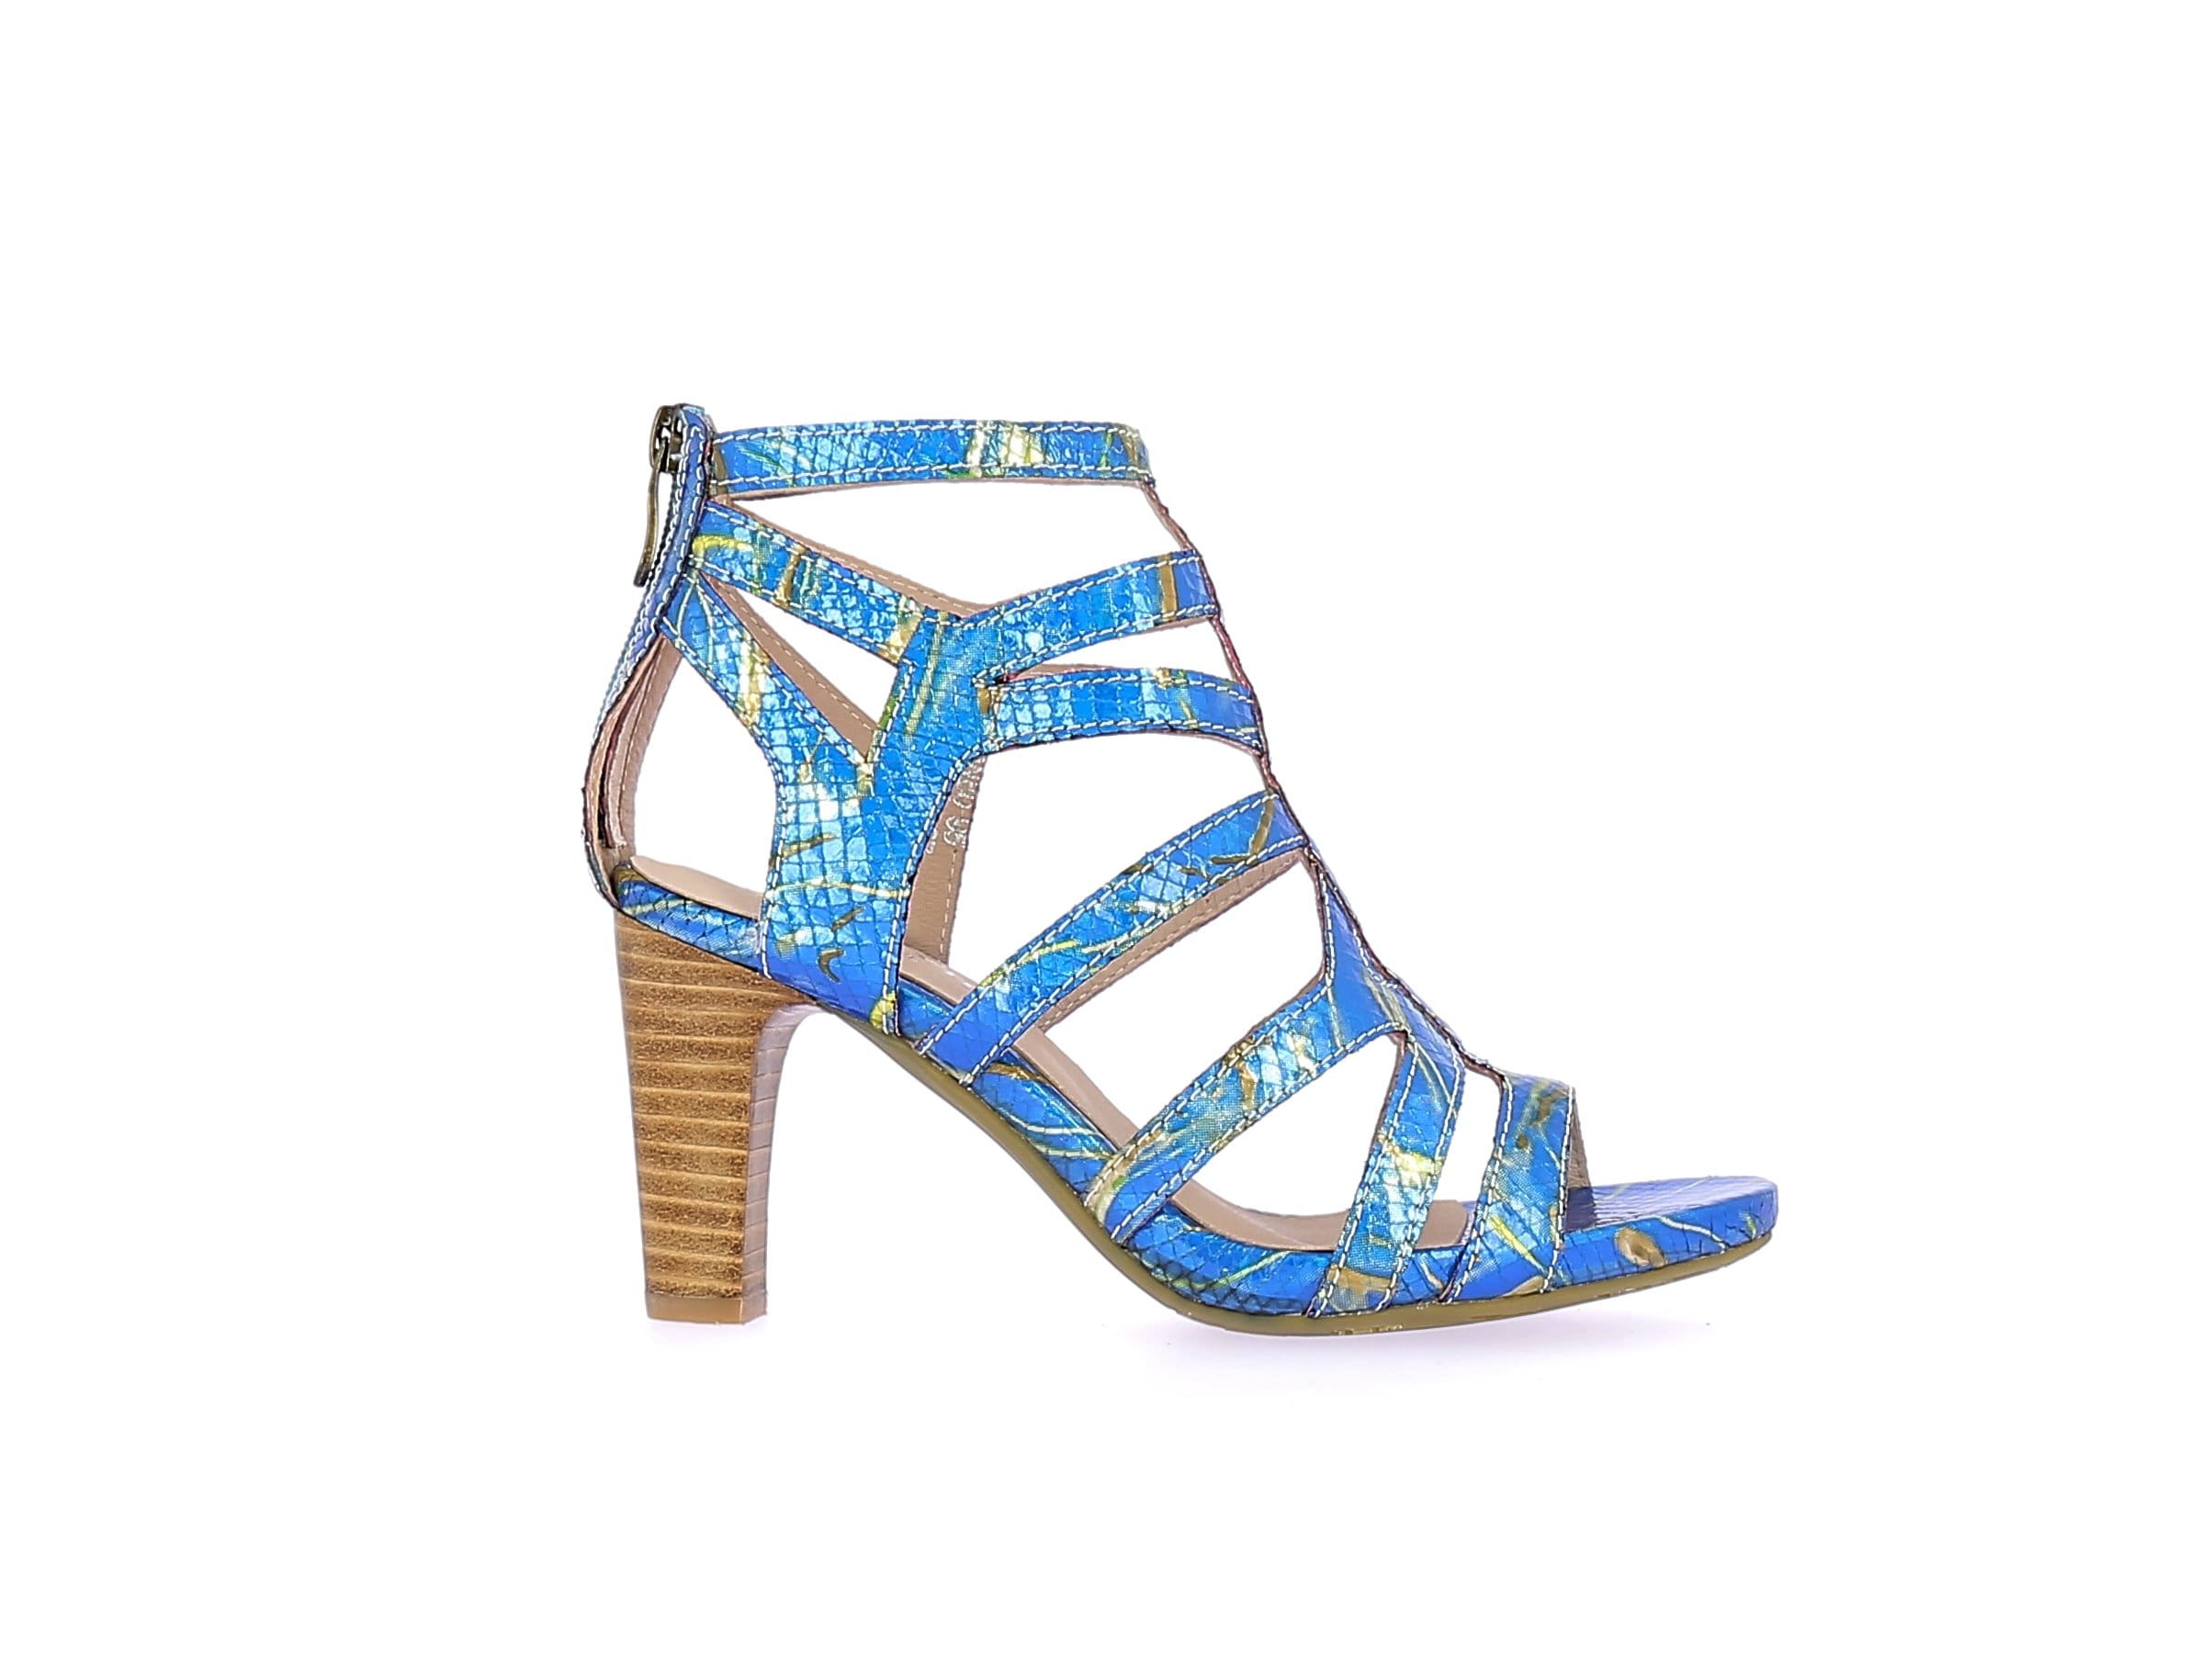 Schuhe ALCBANEO 95 - 35 / BLUE - Sandale